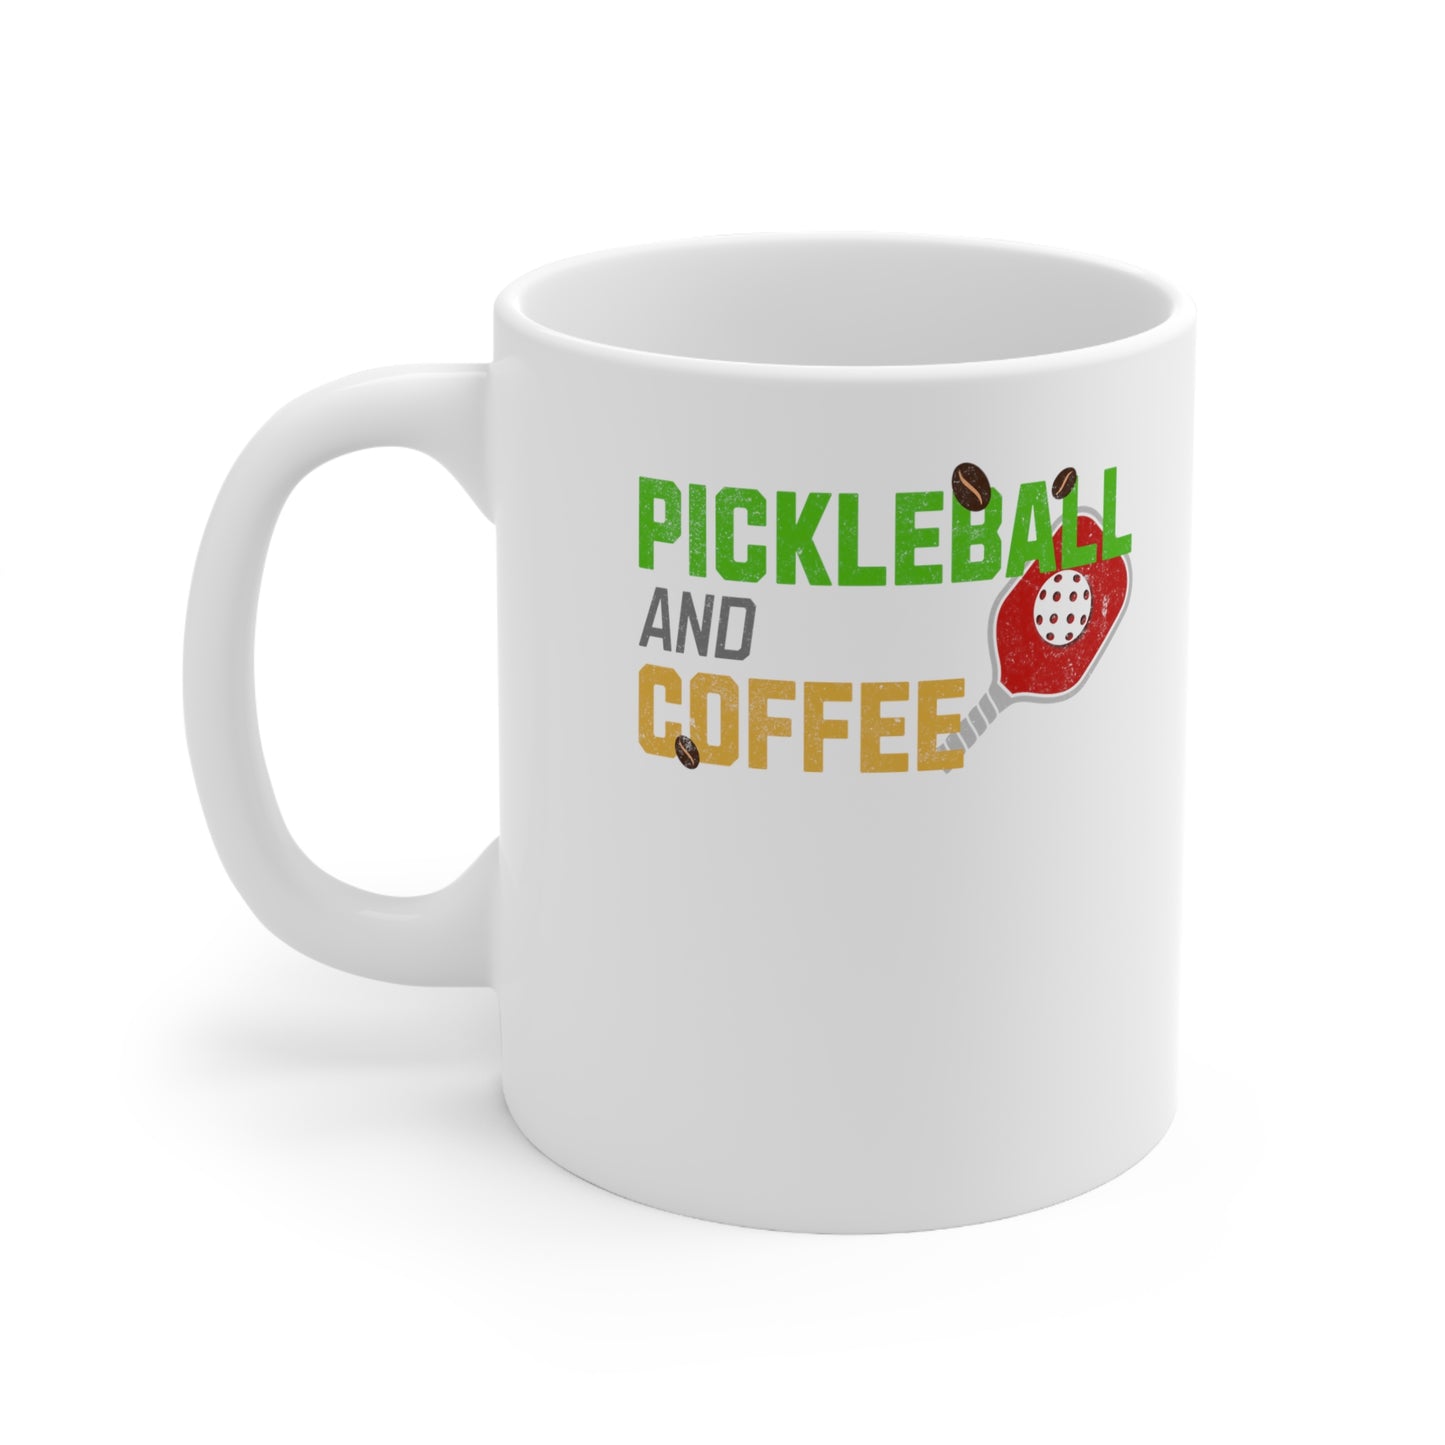 "Pickleball and Coffee" - Retro Ceramic Mug